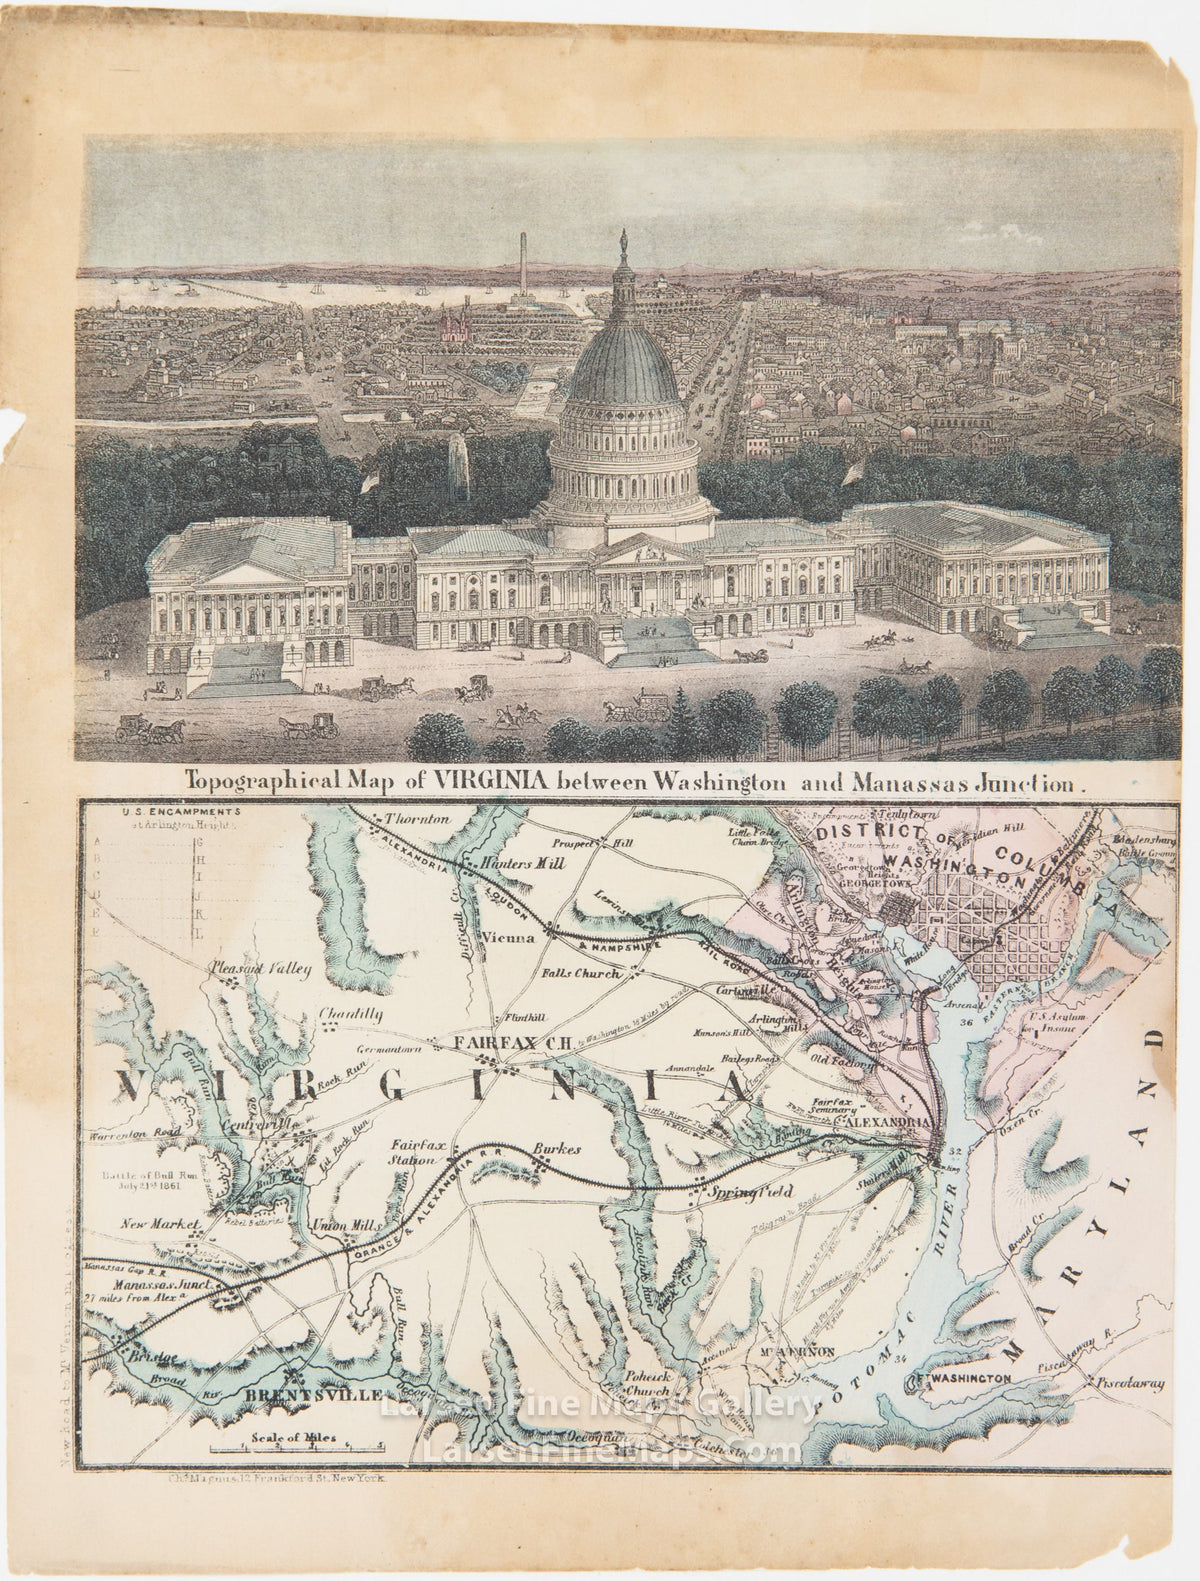 Topographical Map of Virginia between Washington and Manassas Junction